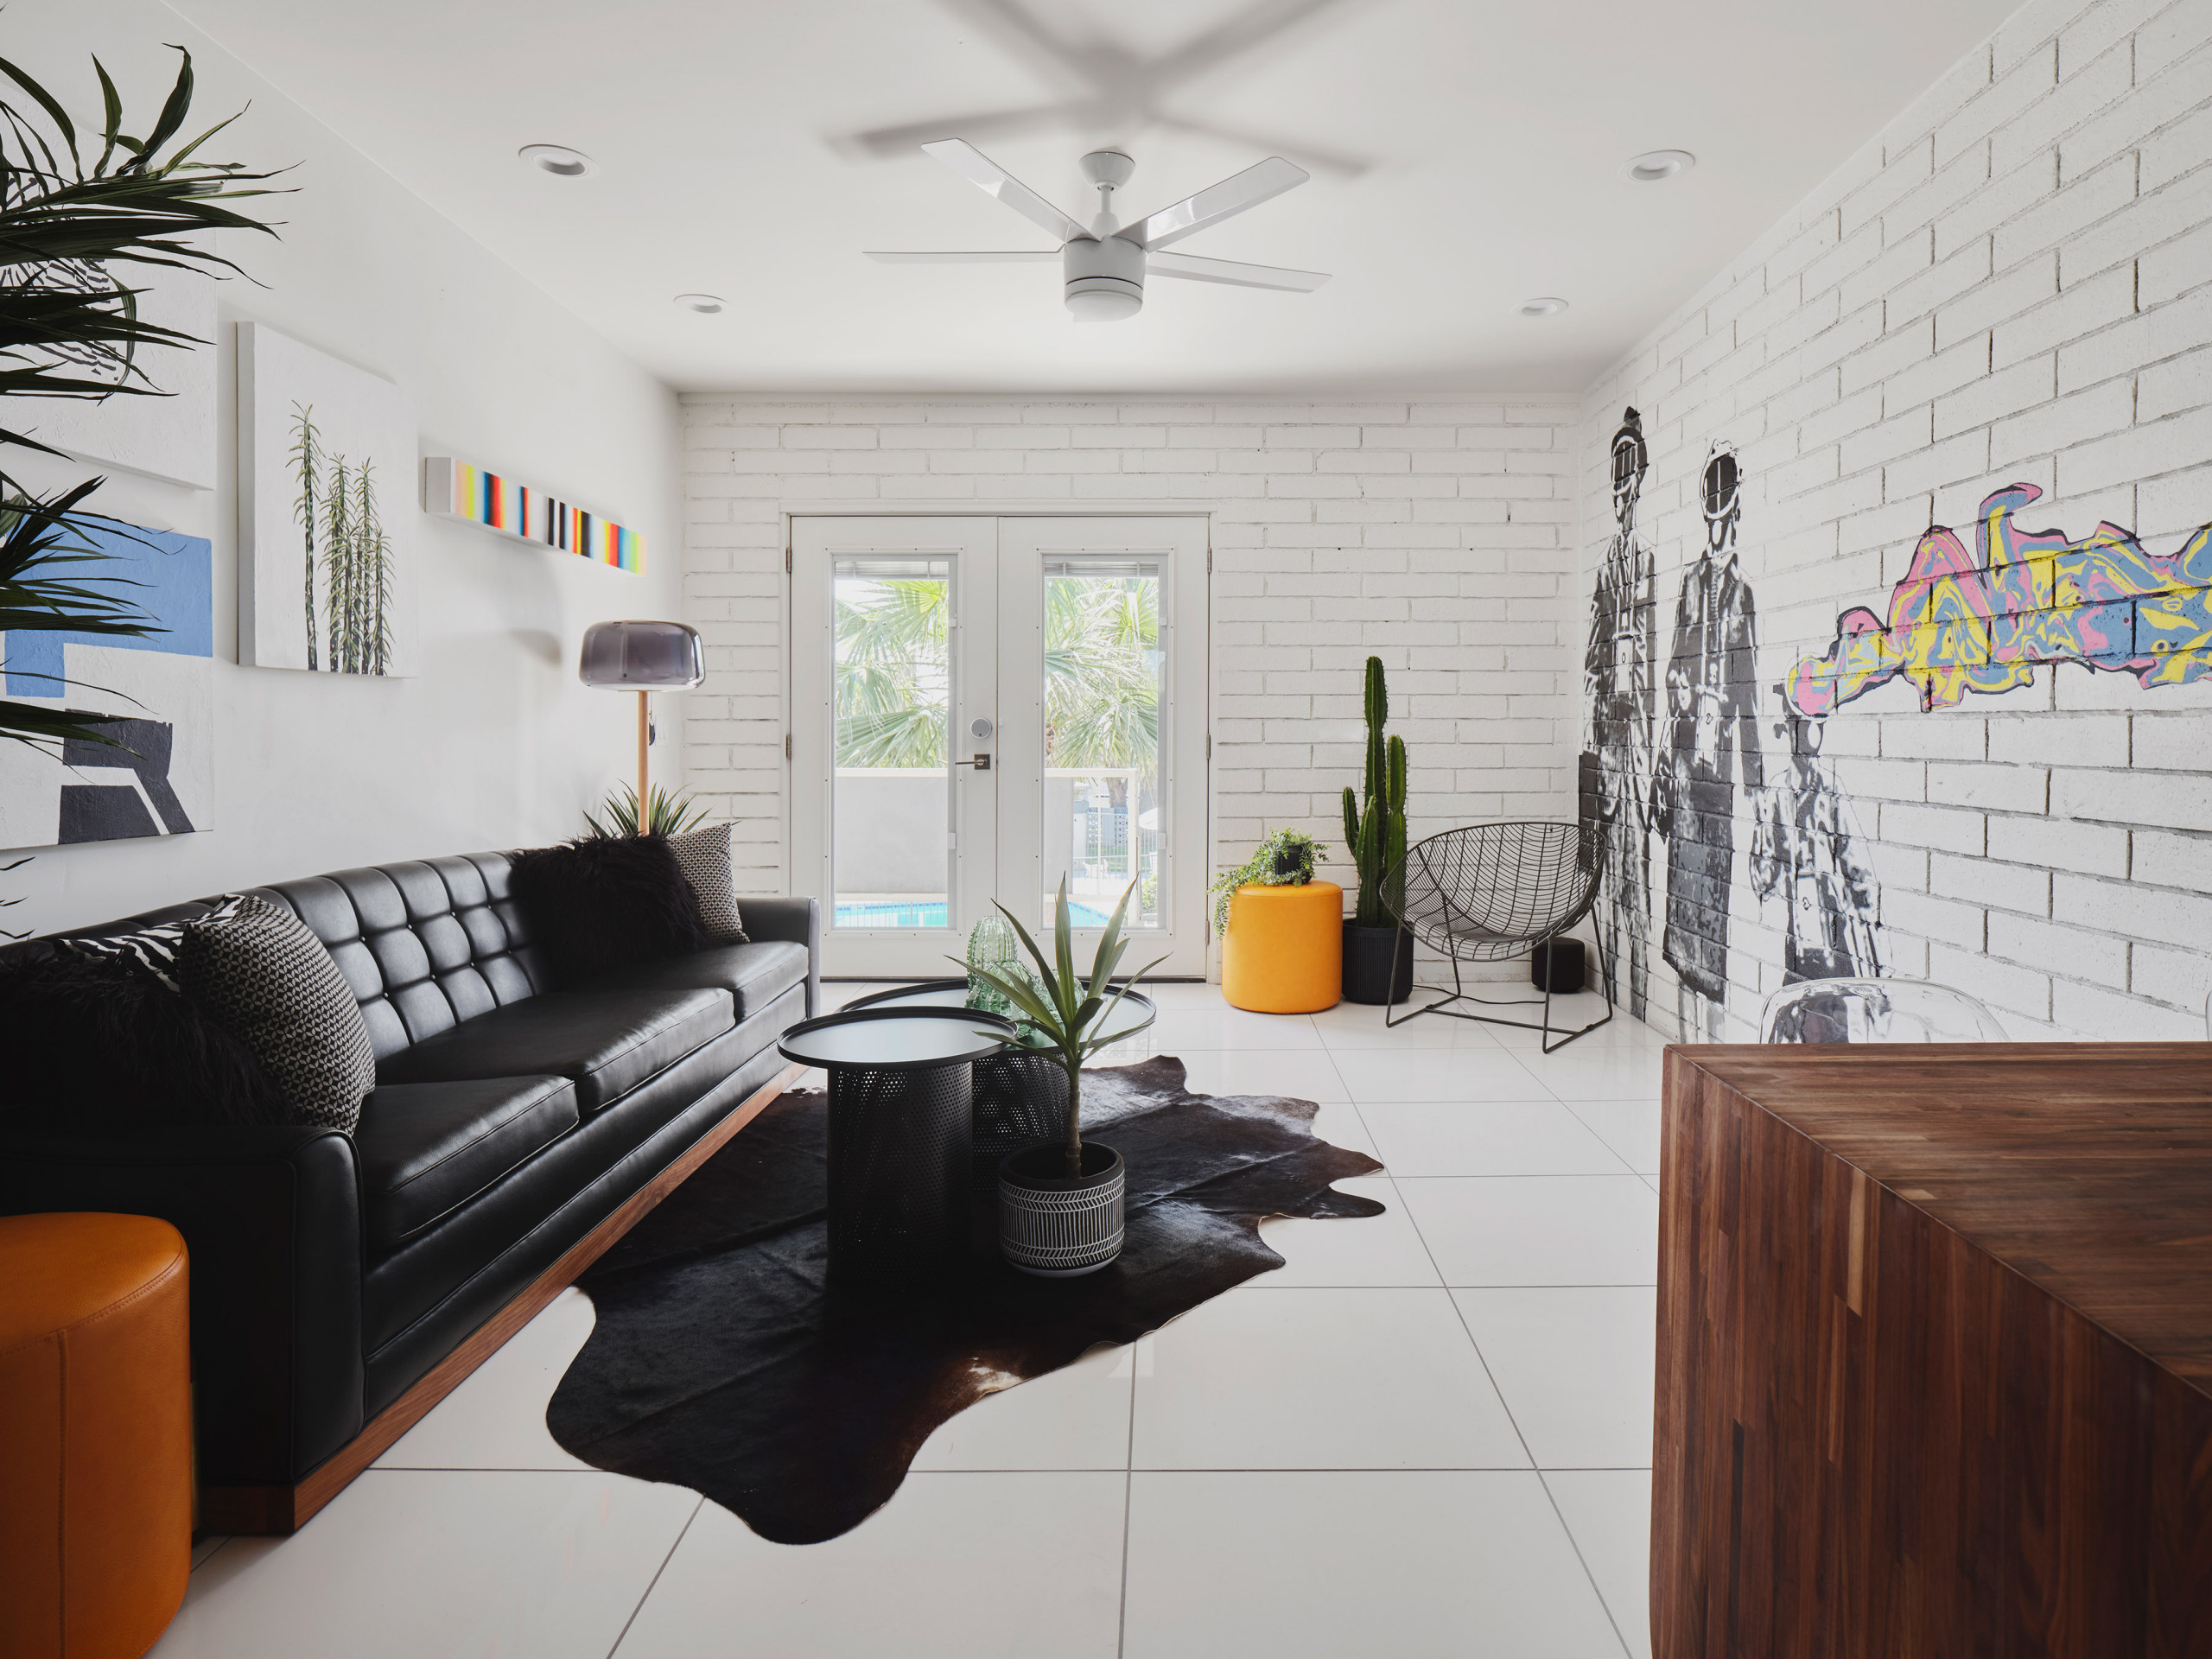 Living Rooms With Black Sofas Houzz, Living Room Decorating Ideas For Black Sofas